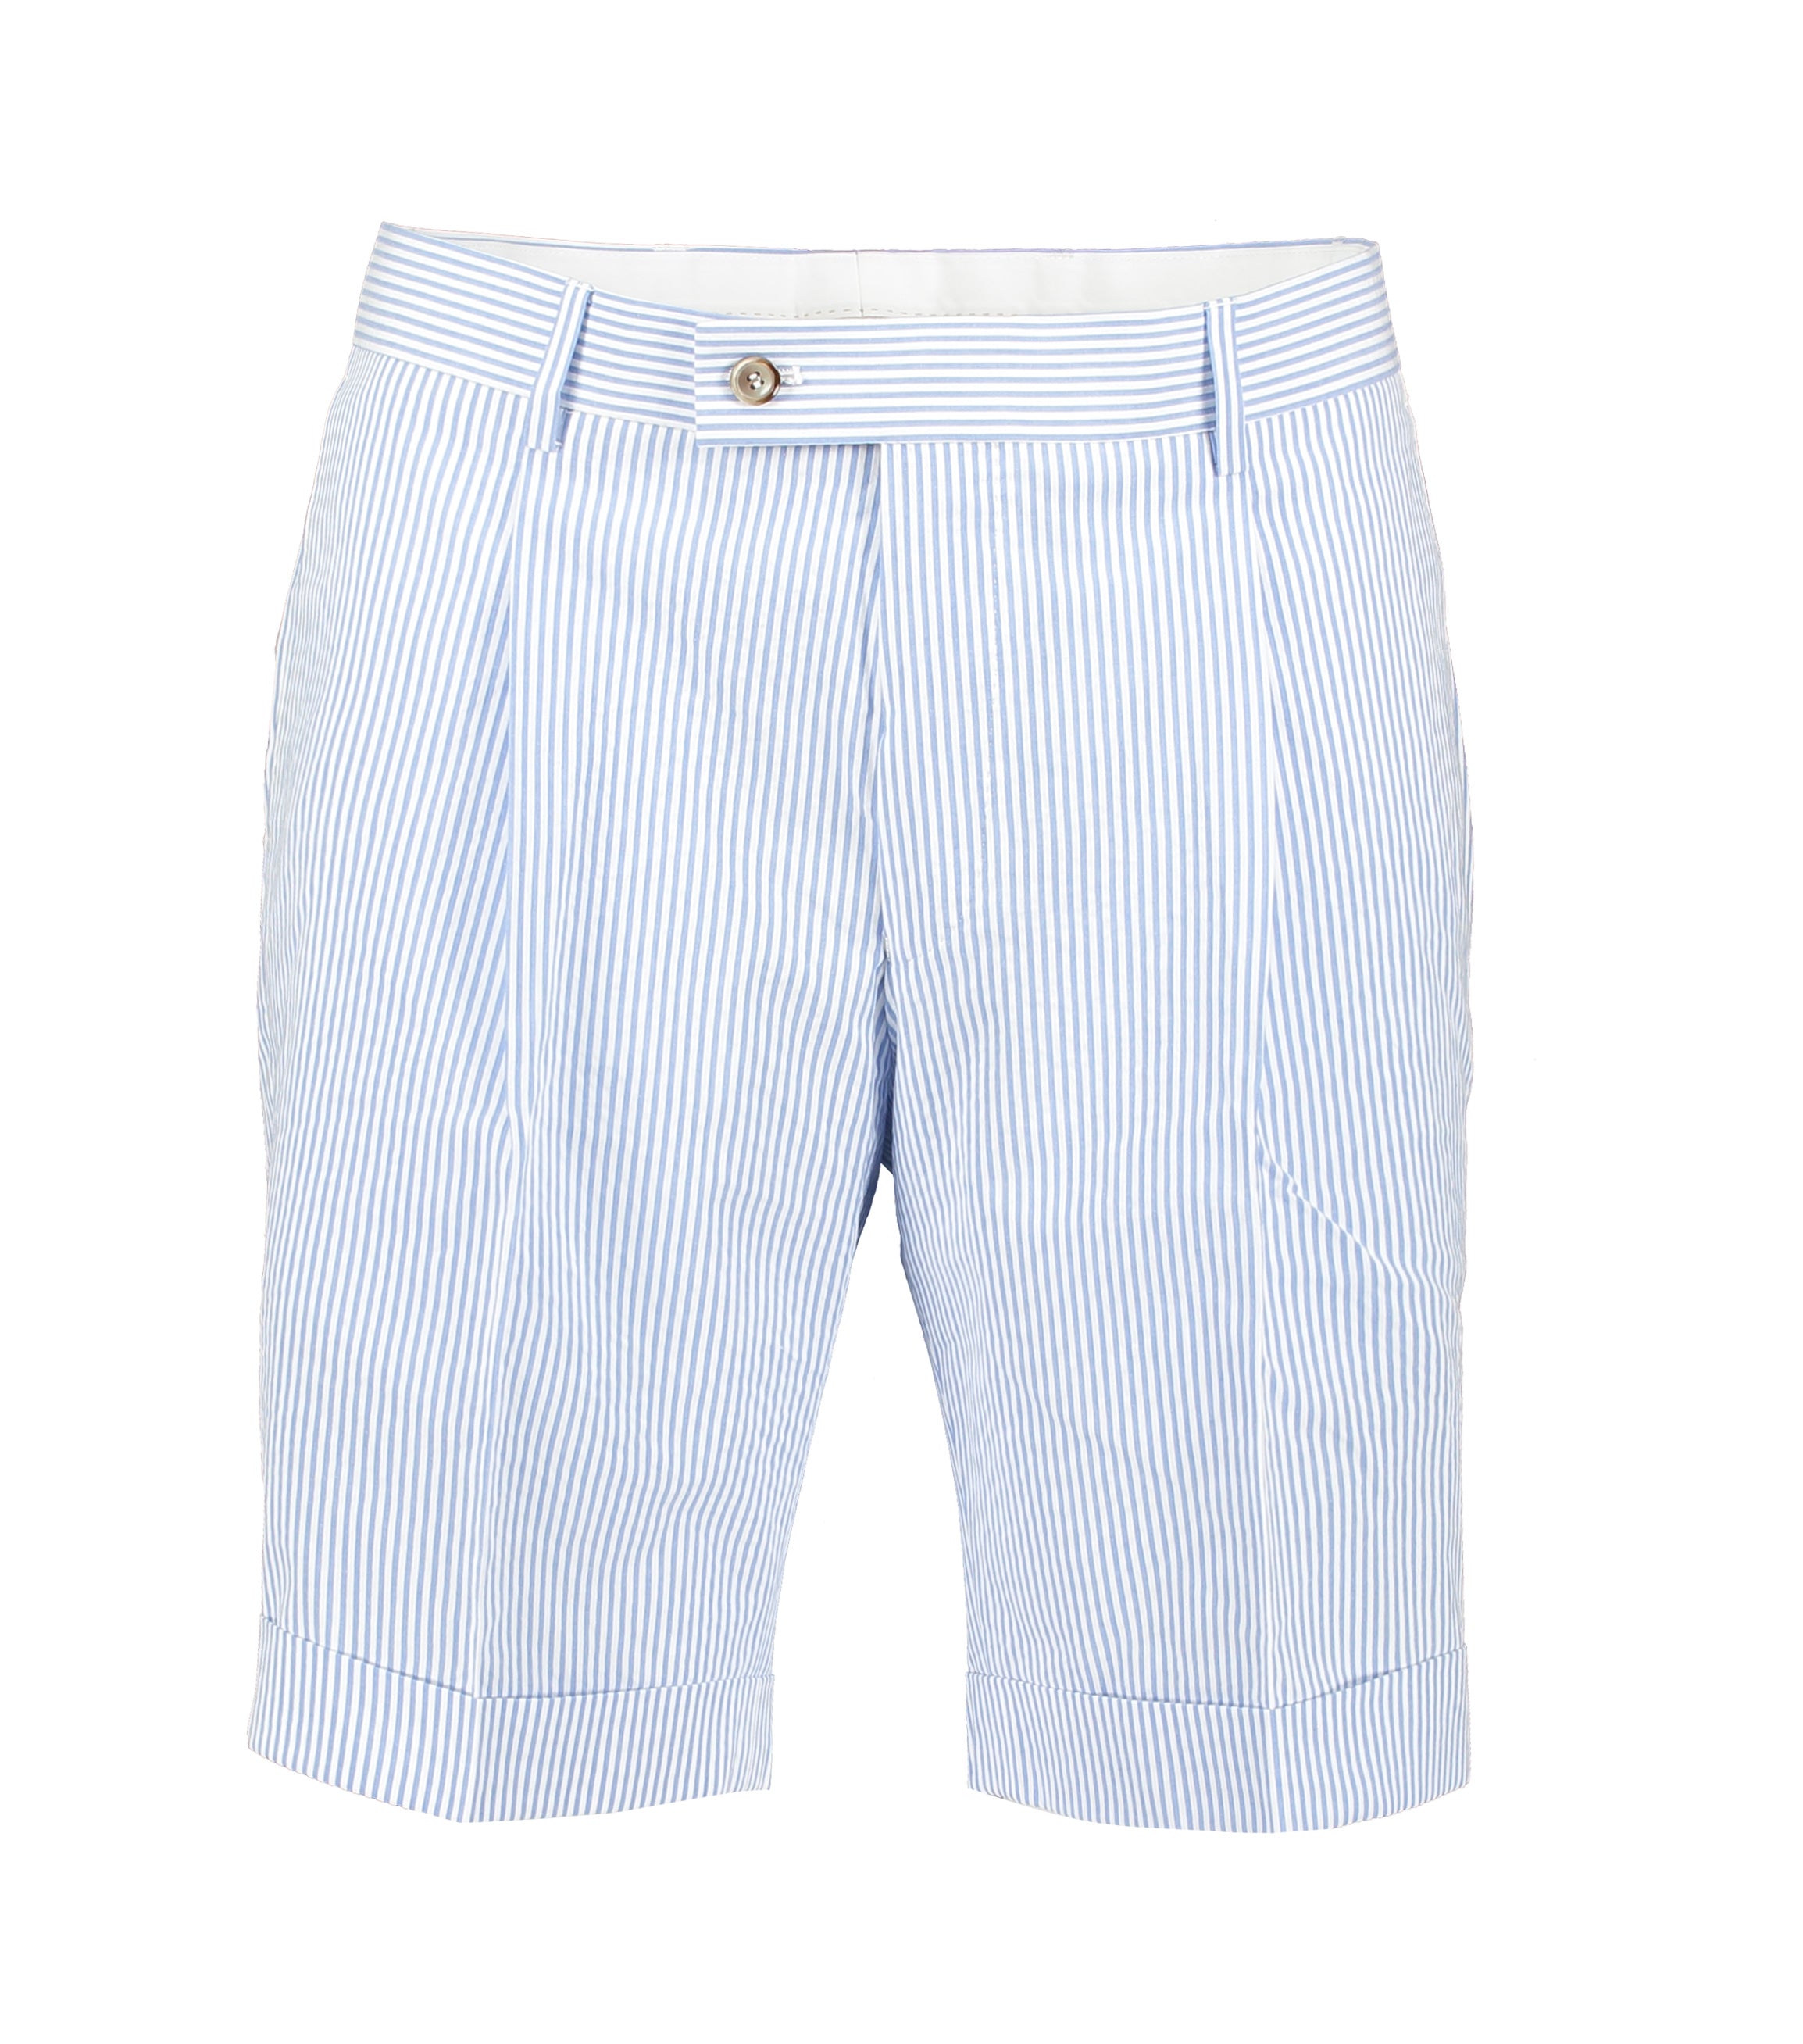 Charlie Light Blue Striped Seersucker Shorts